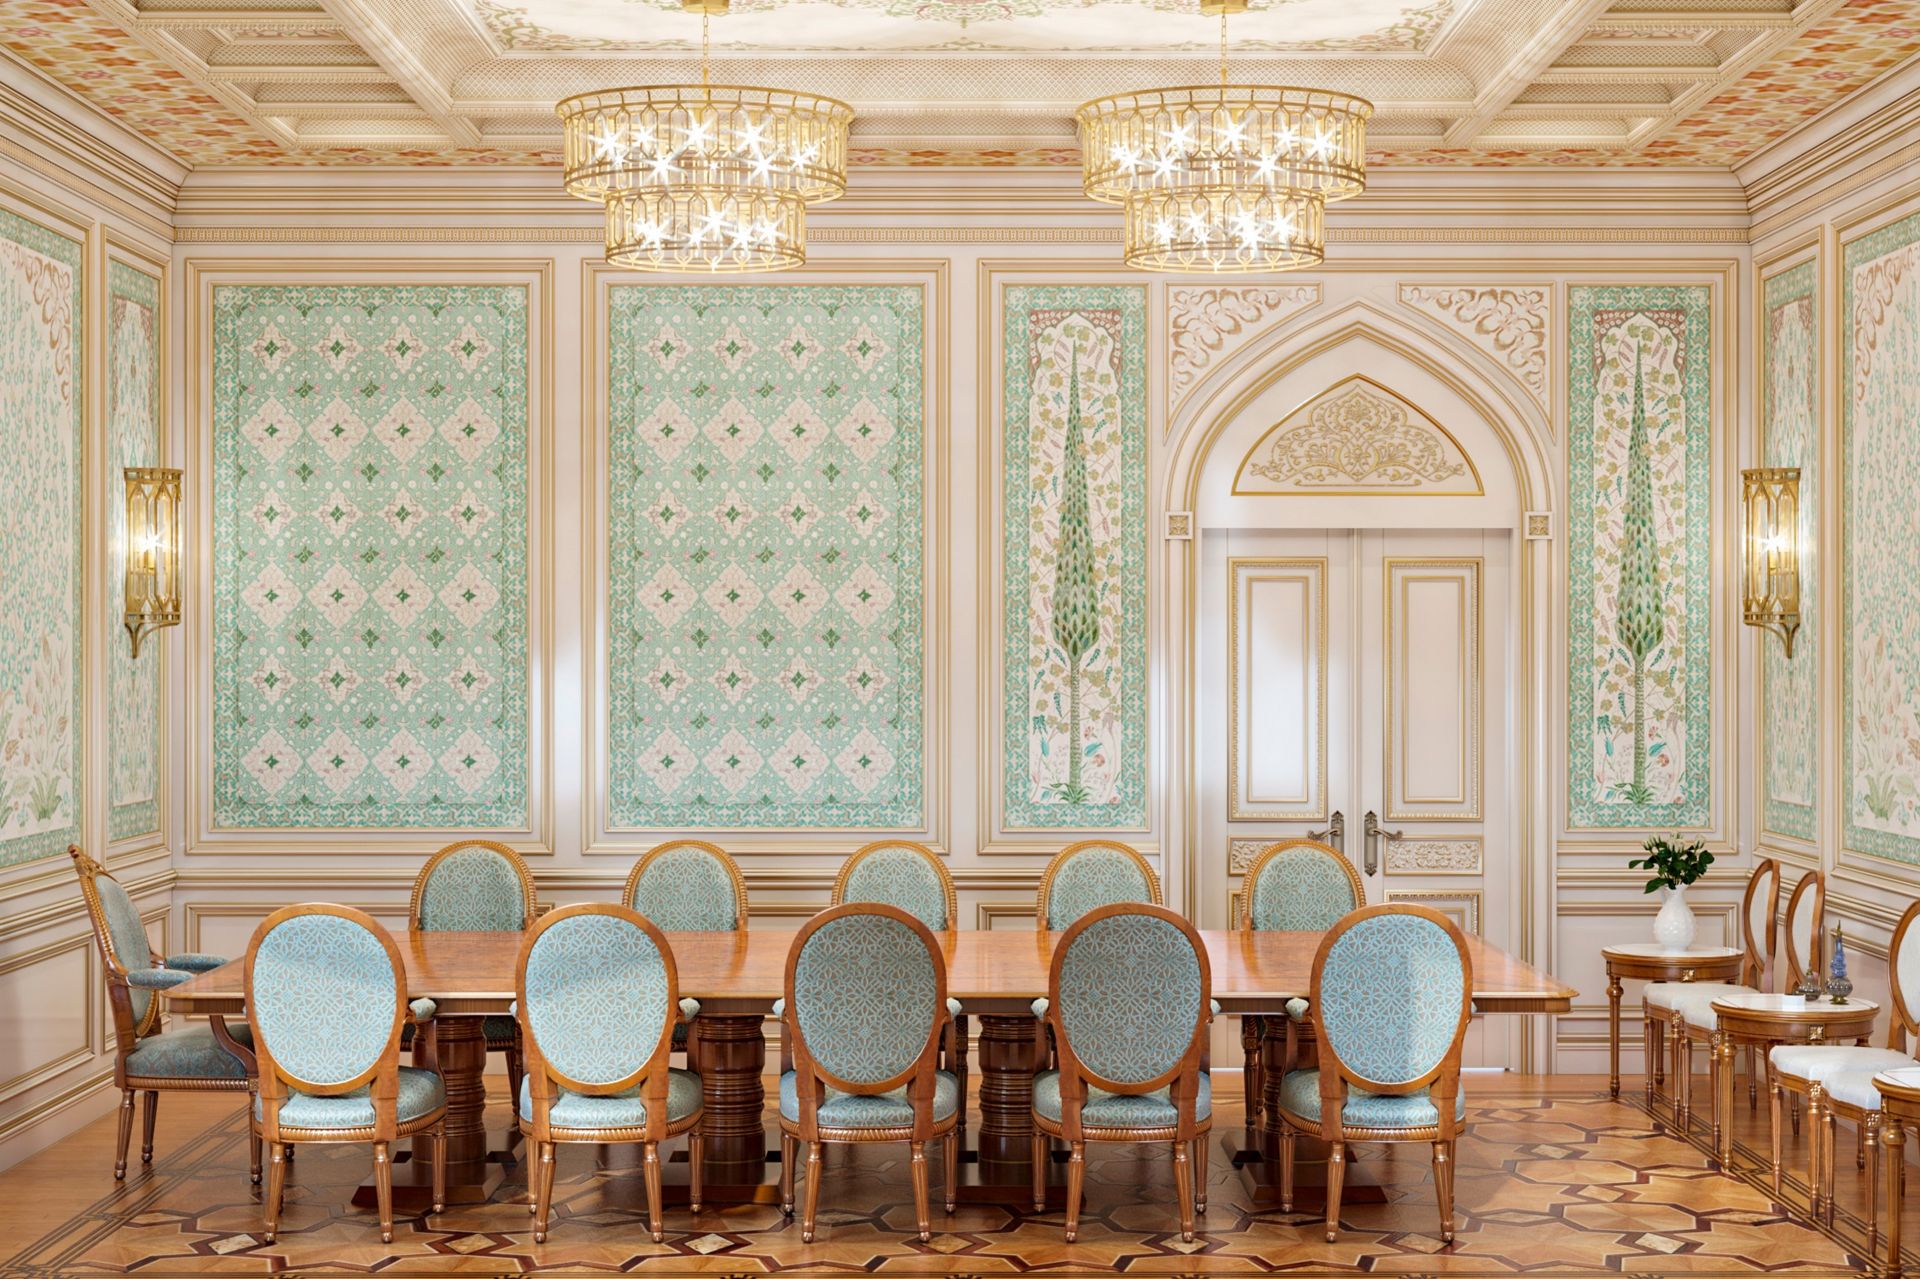 Design, Meeting room interior design in oriental style